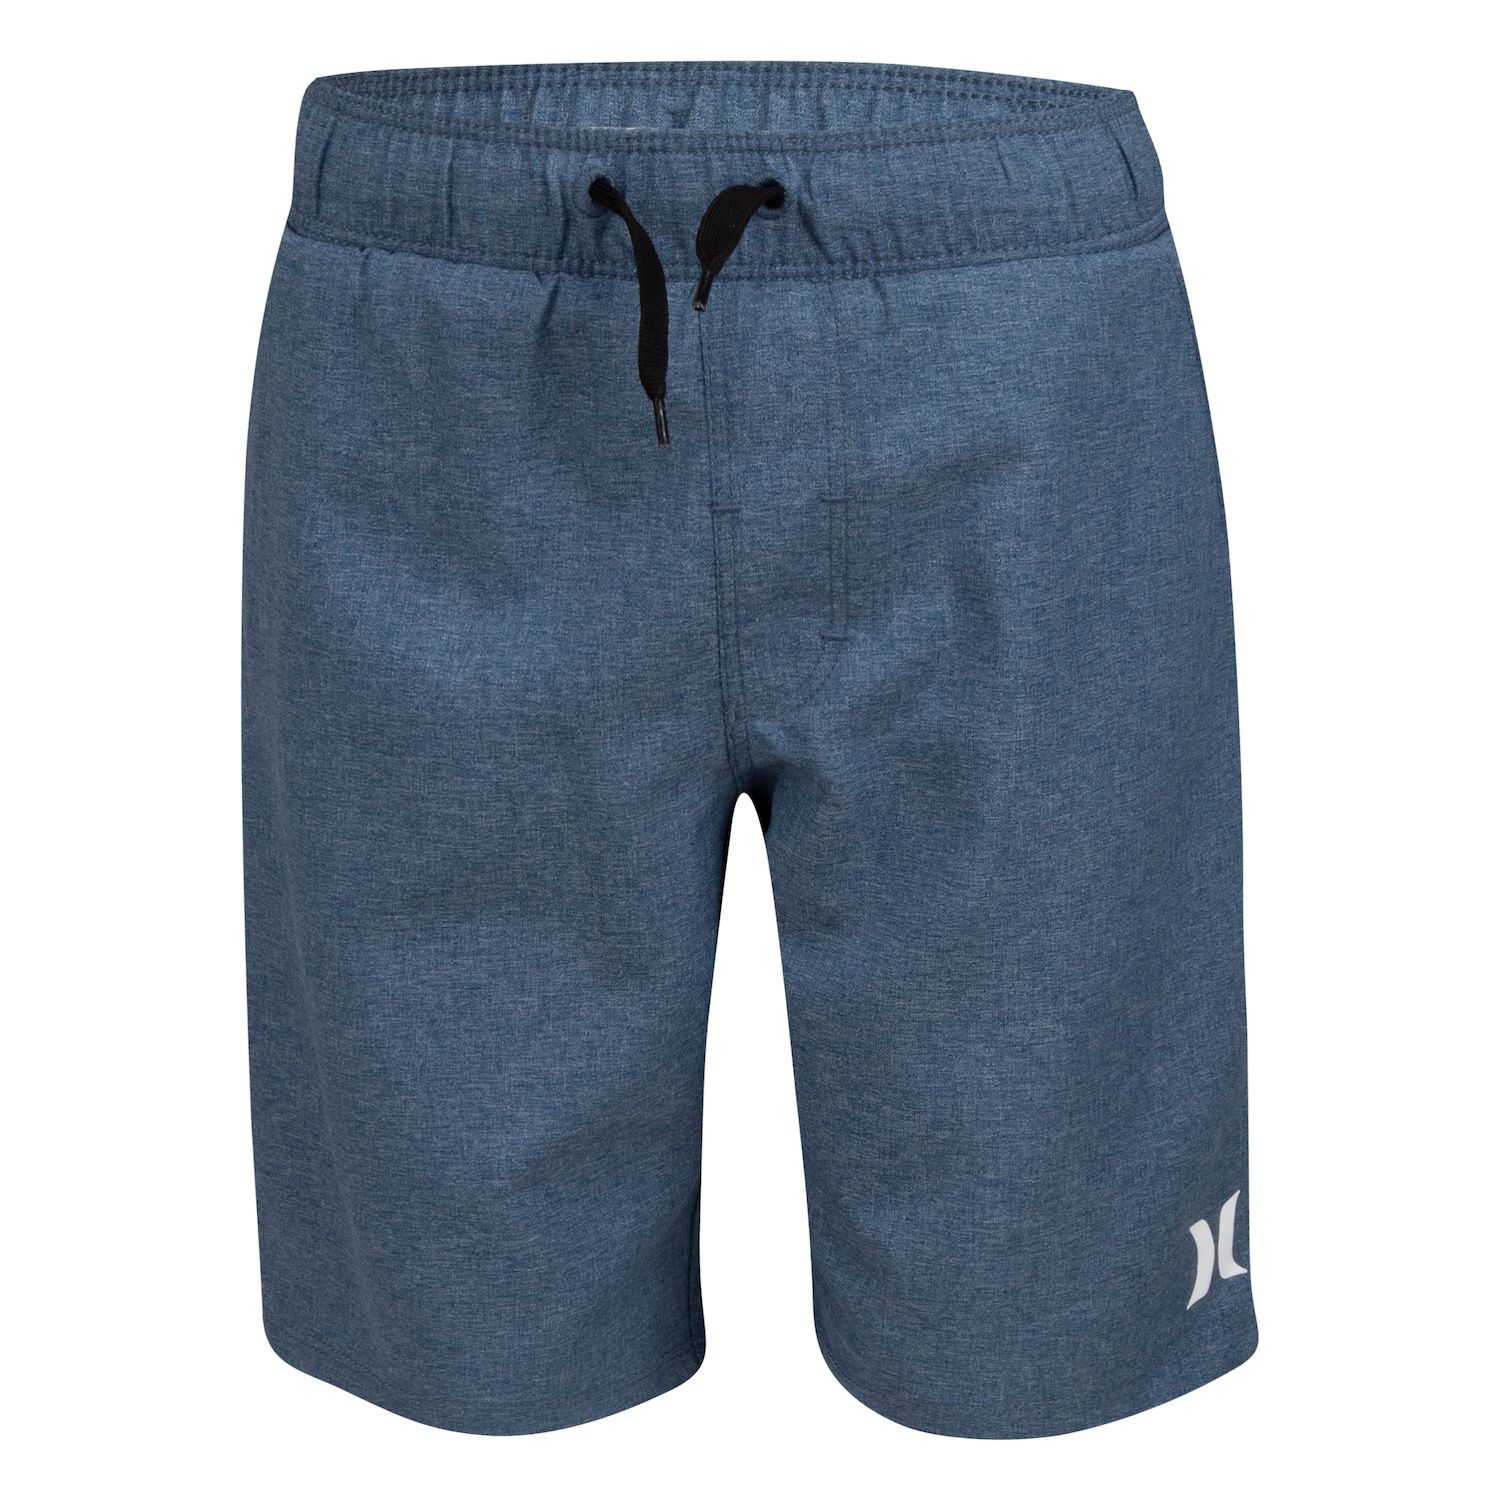 Image for Hurley Boys 4-7 Hybrid Shorts at Kohl's.